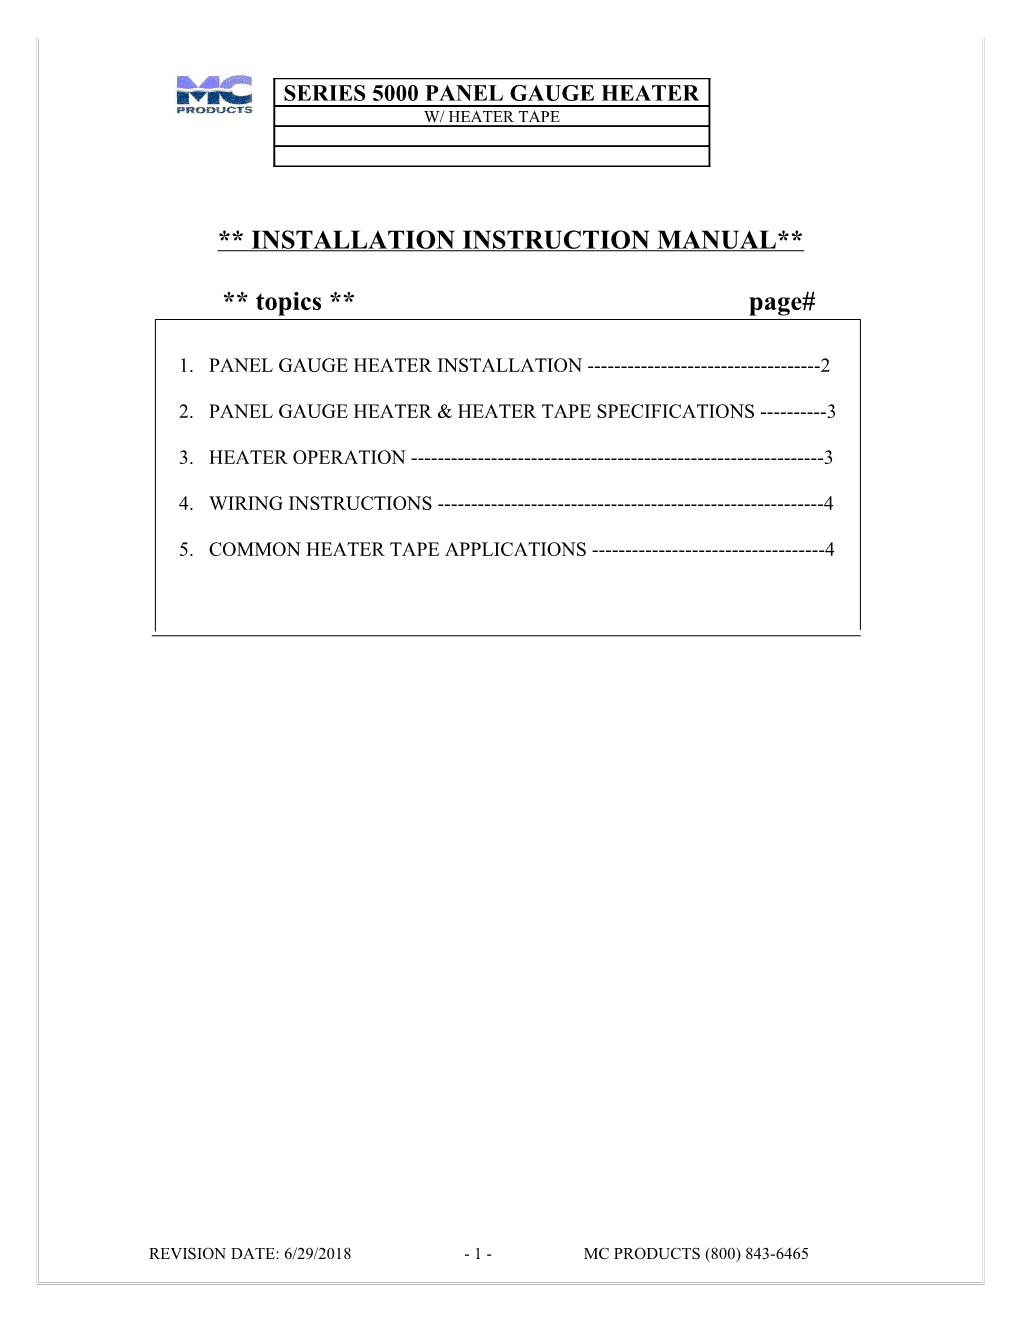 Installation Instruction Manual s1